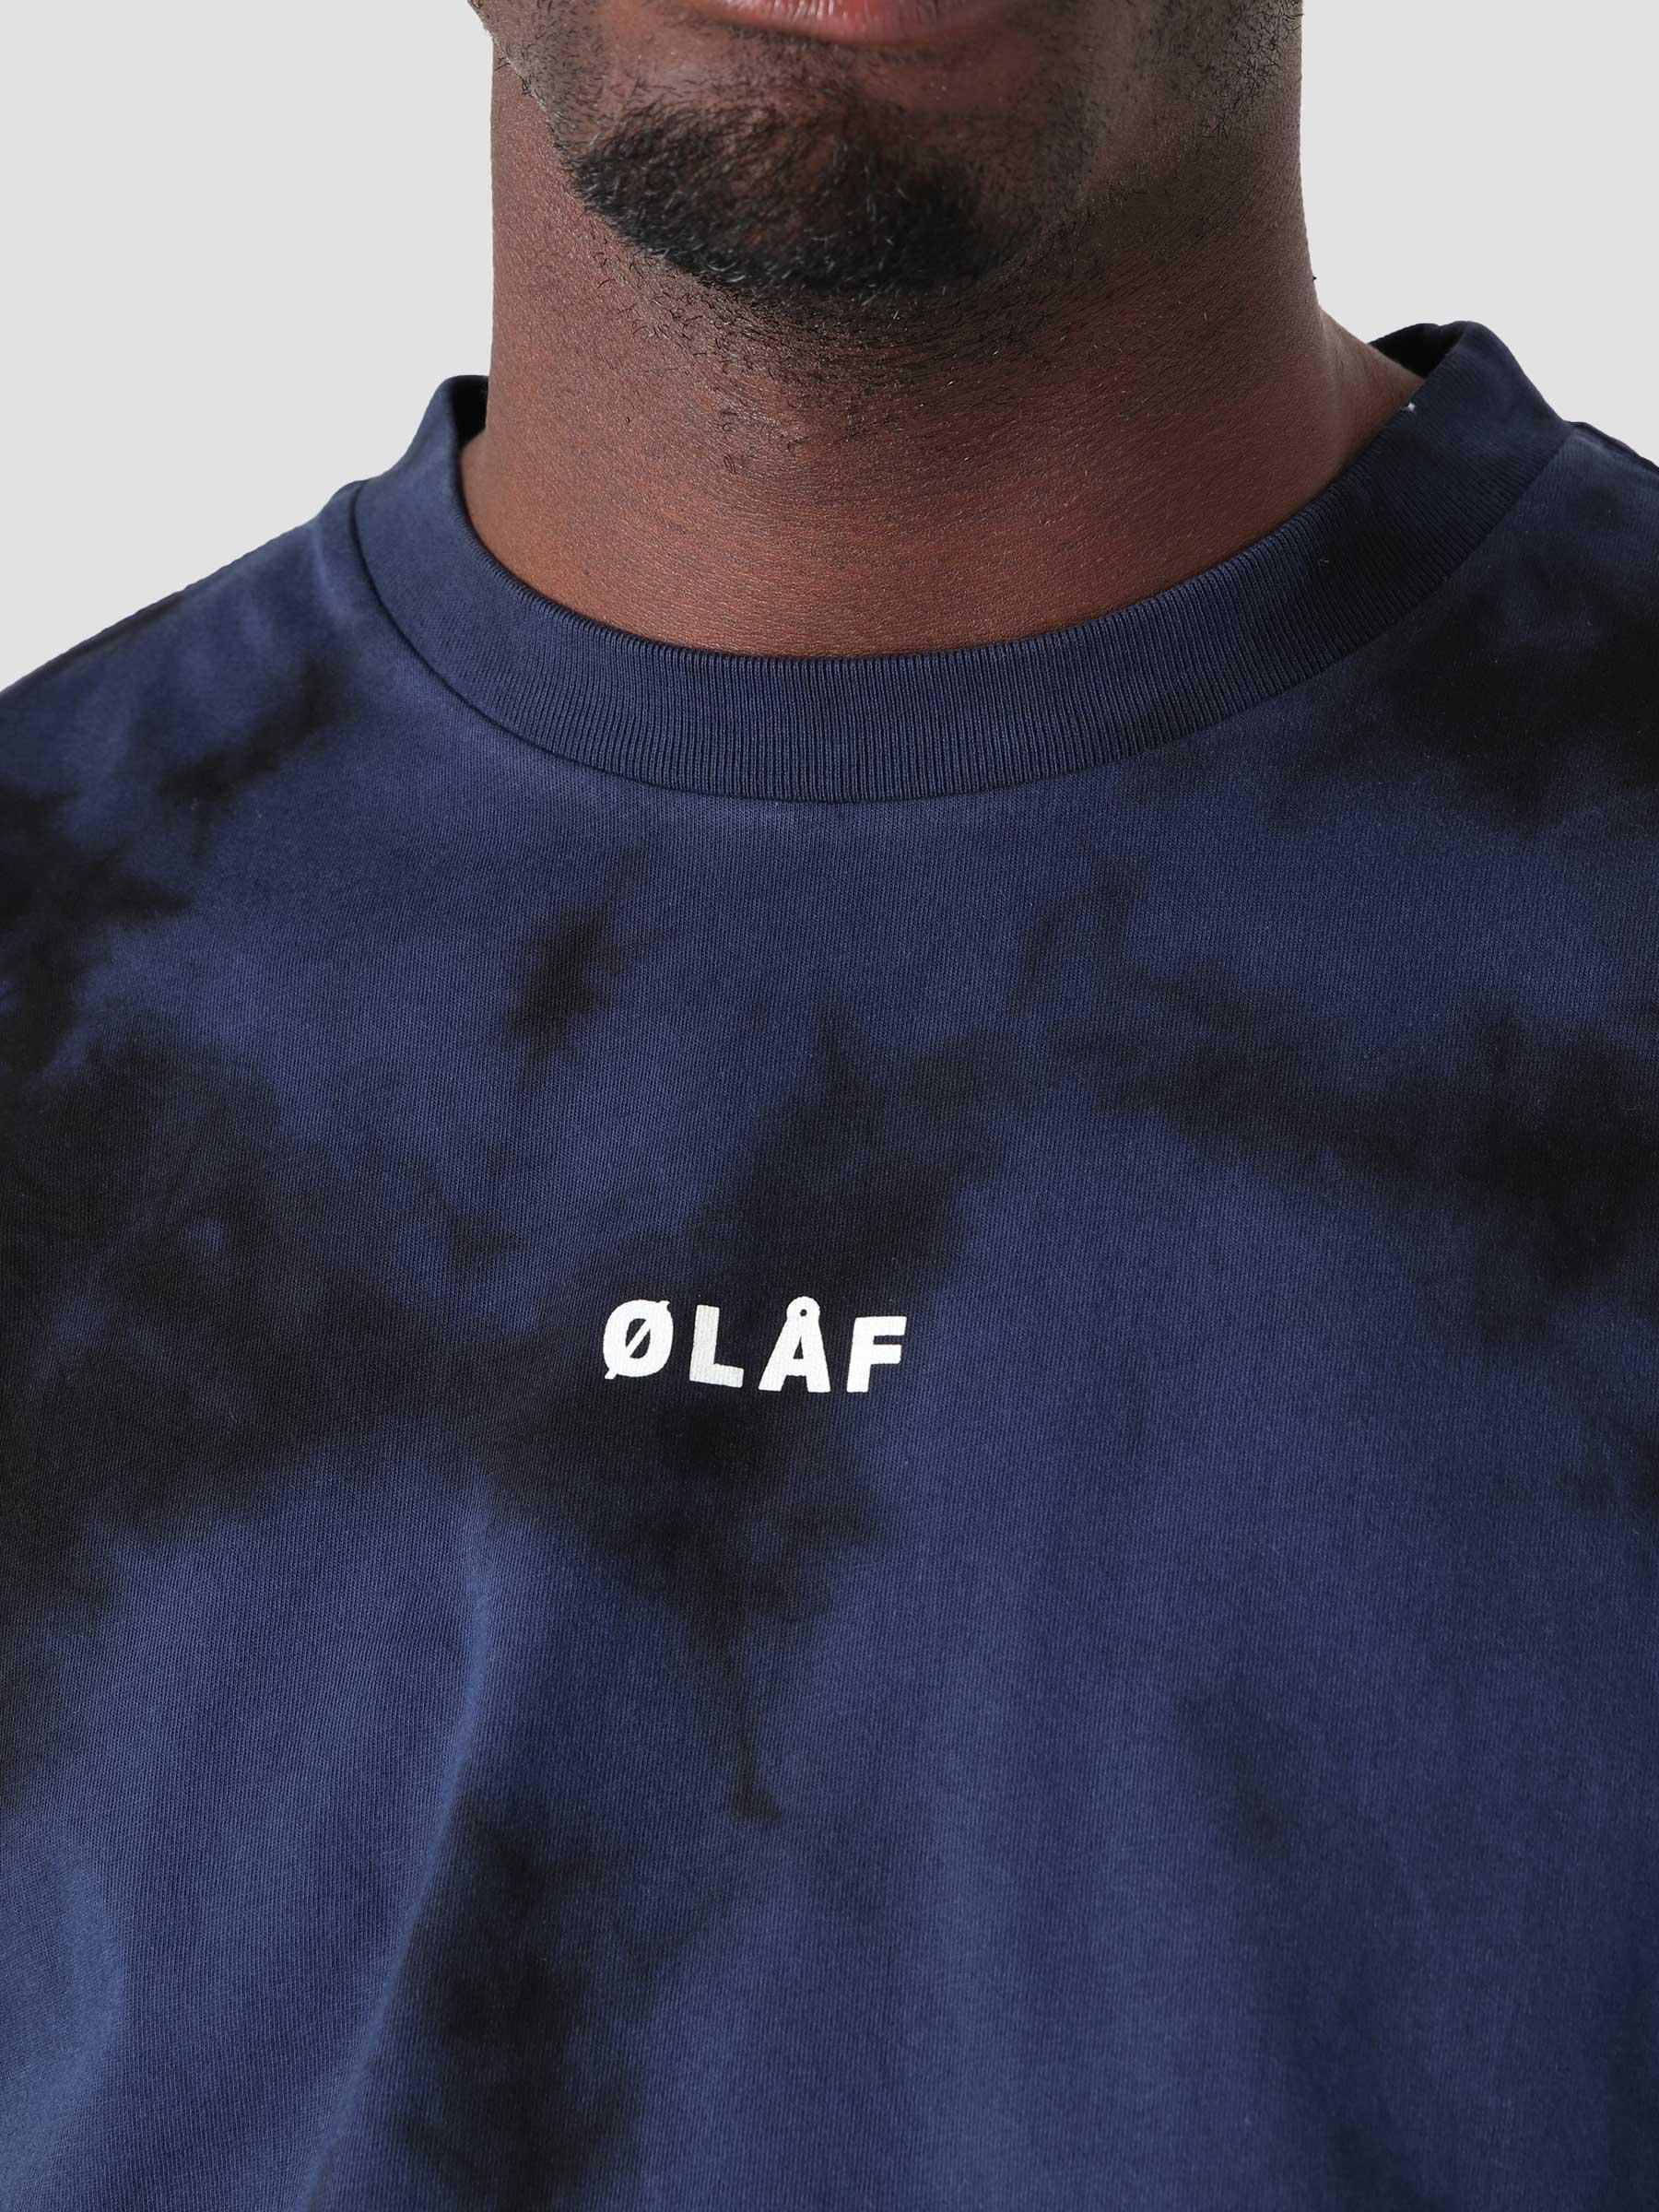 OLAF Tie Dye Block T-Shirt Black Blue